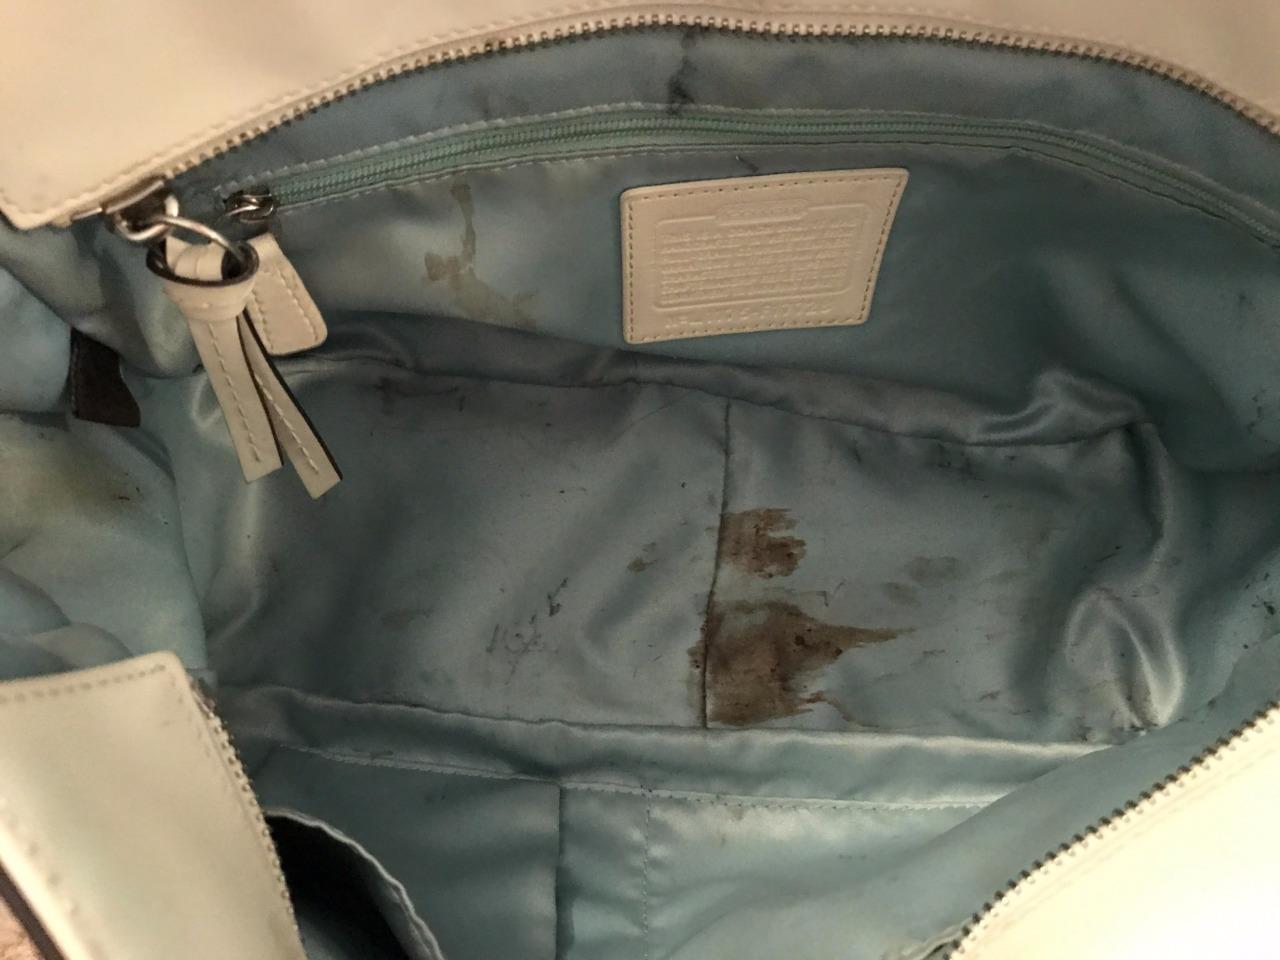 COACH F17728 White Patent Leather Bag Medium Size Tote 2 Straps Purse Handbag | eBay